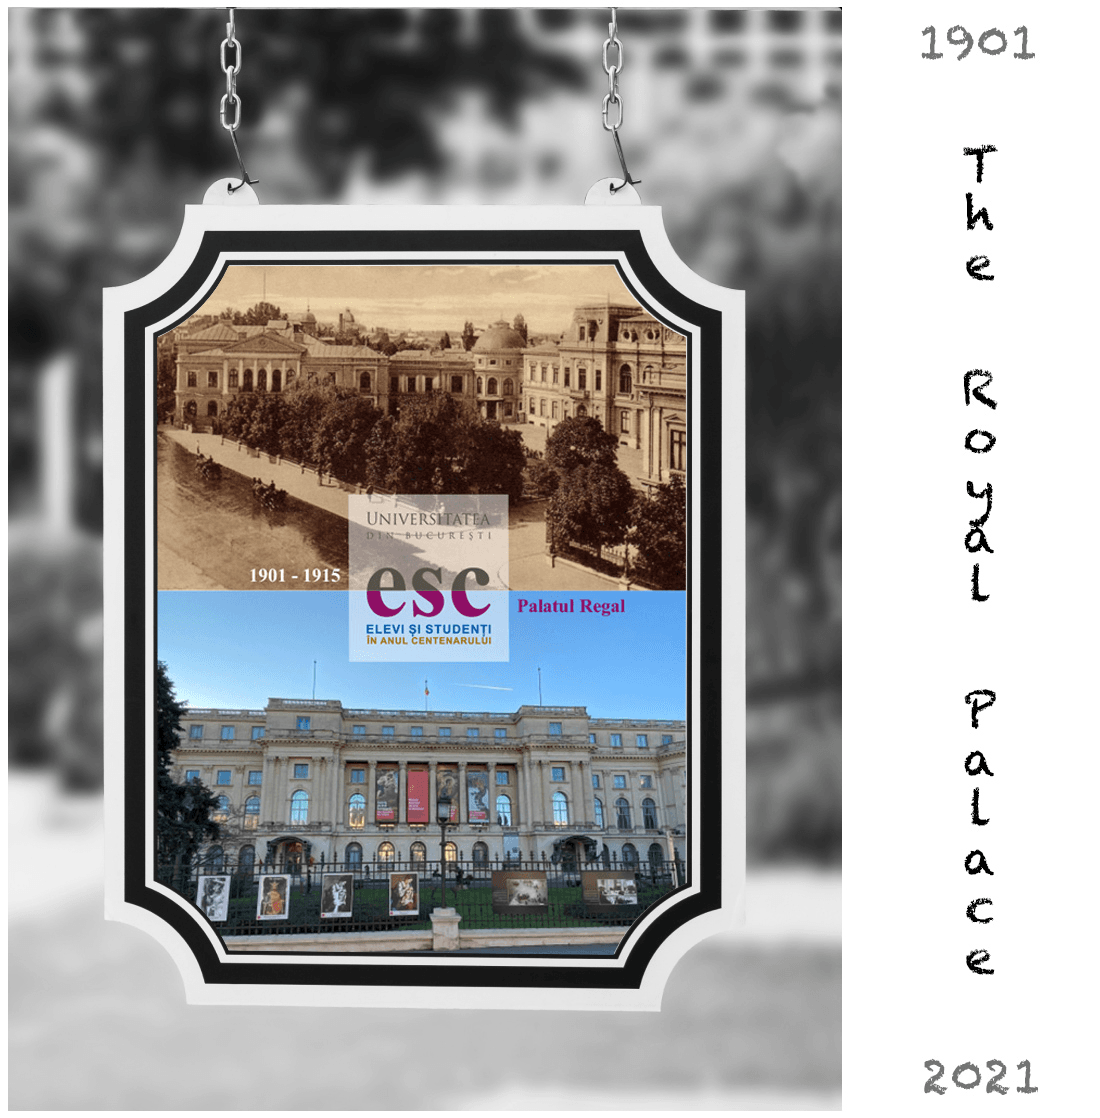 The Royal Palace of Romania - 1900 - 2091